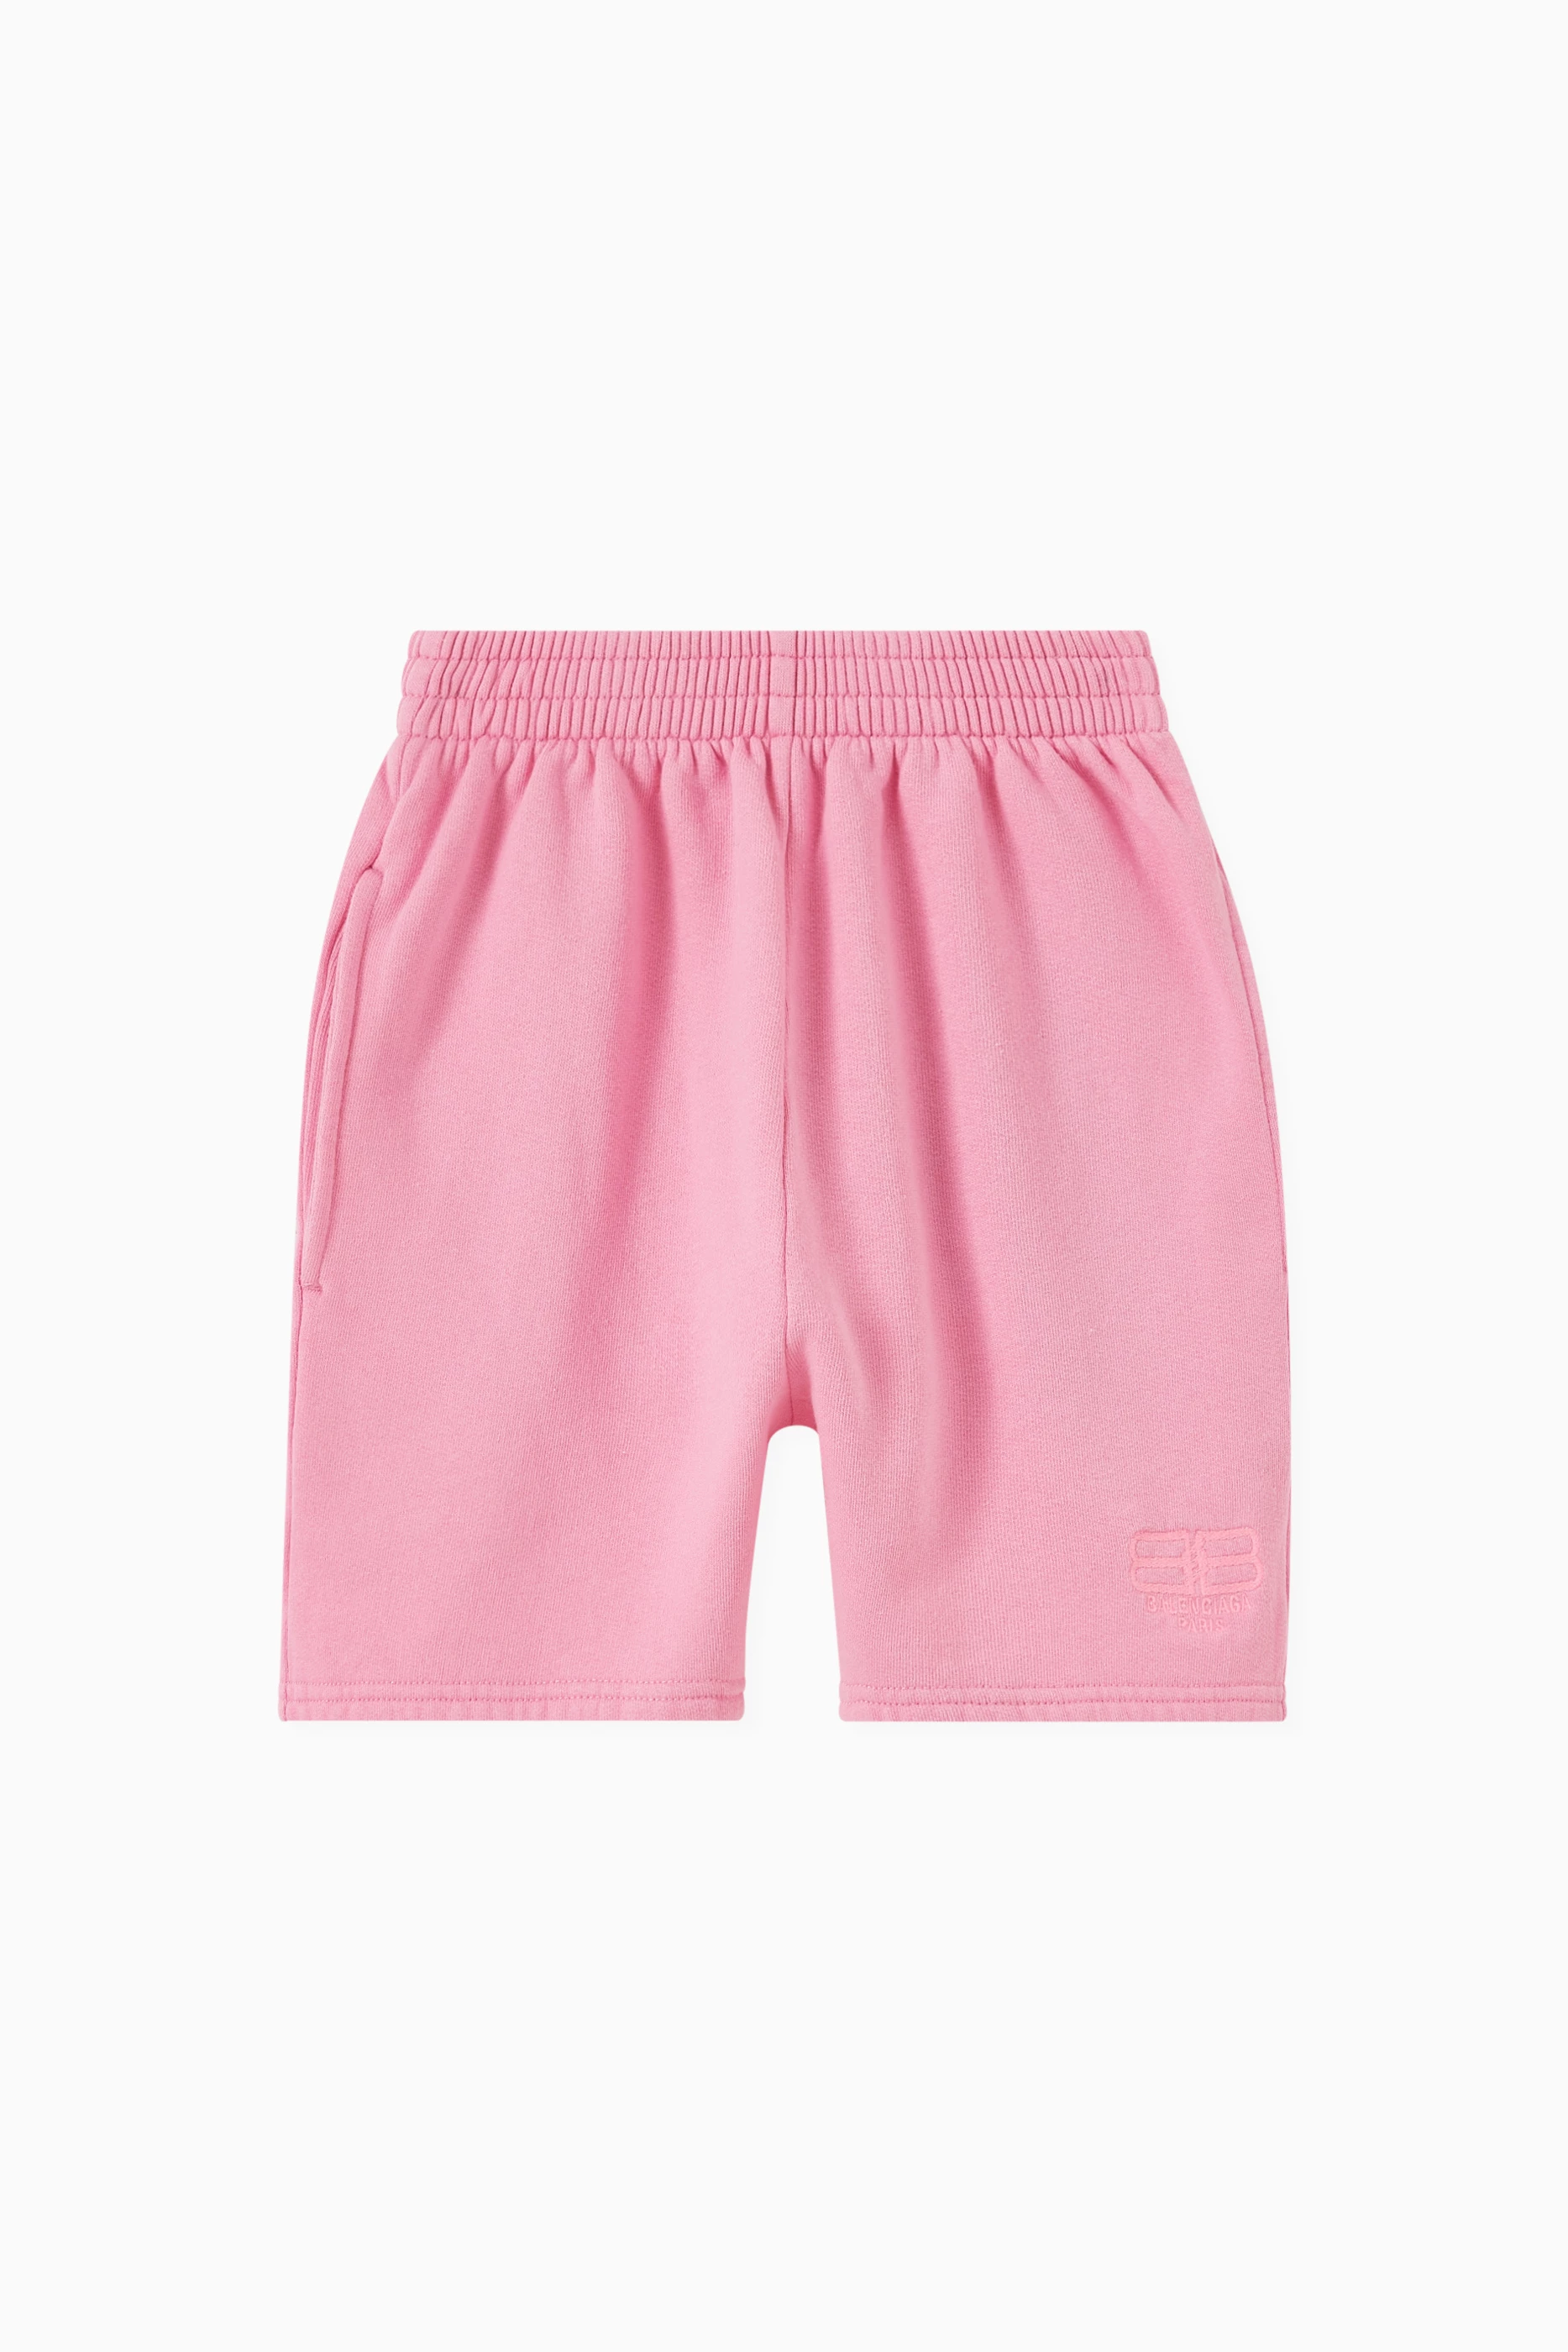 Buy Pink Cotton Boxer Shorts online in Dubai